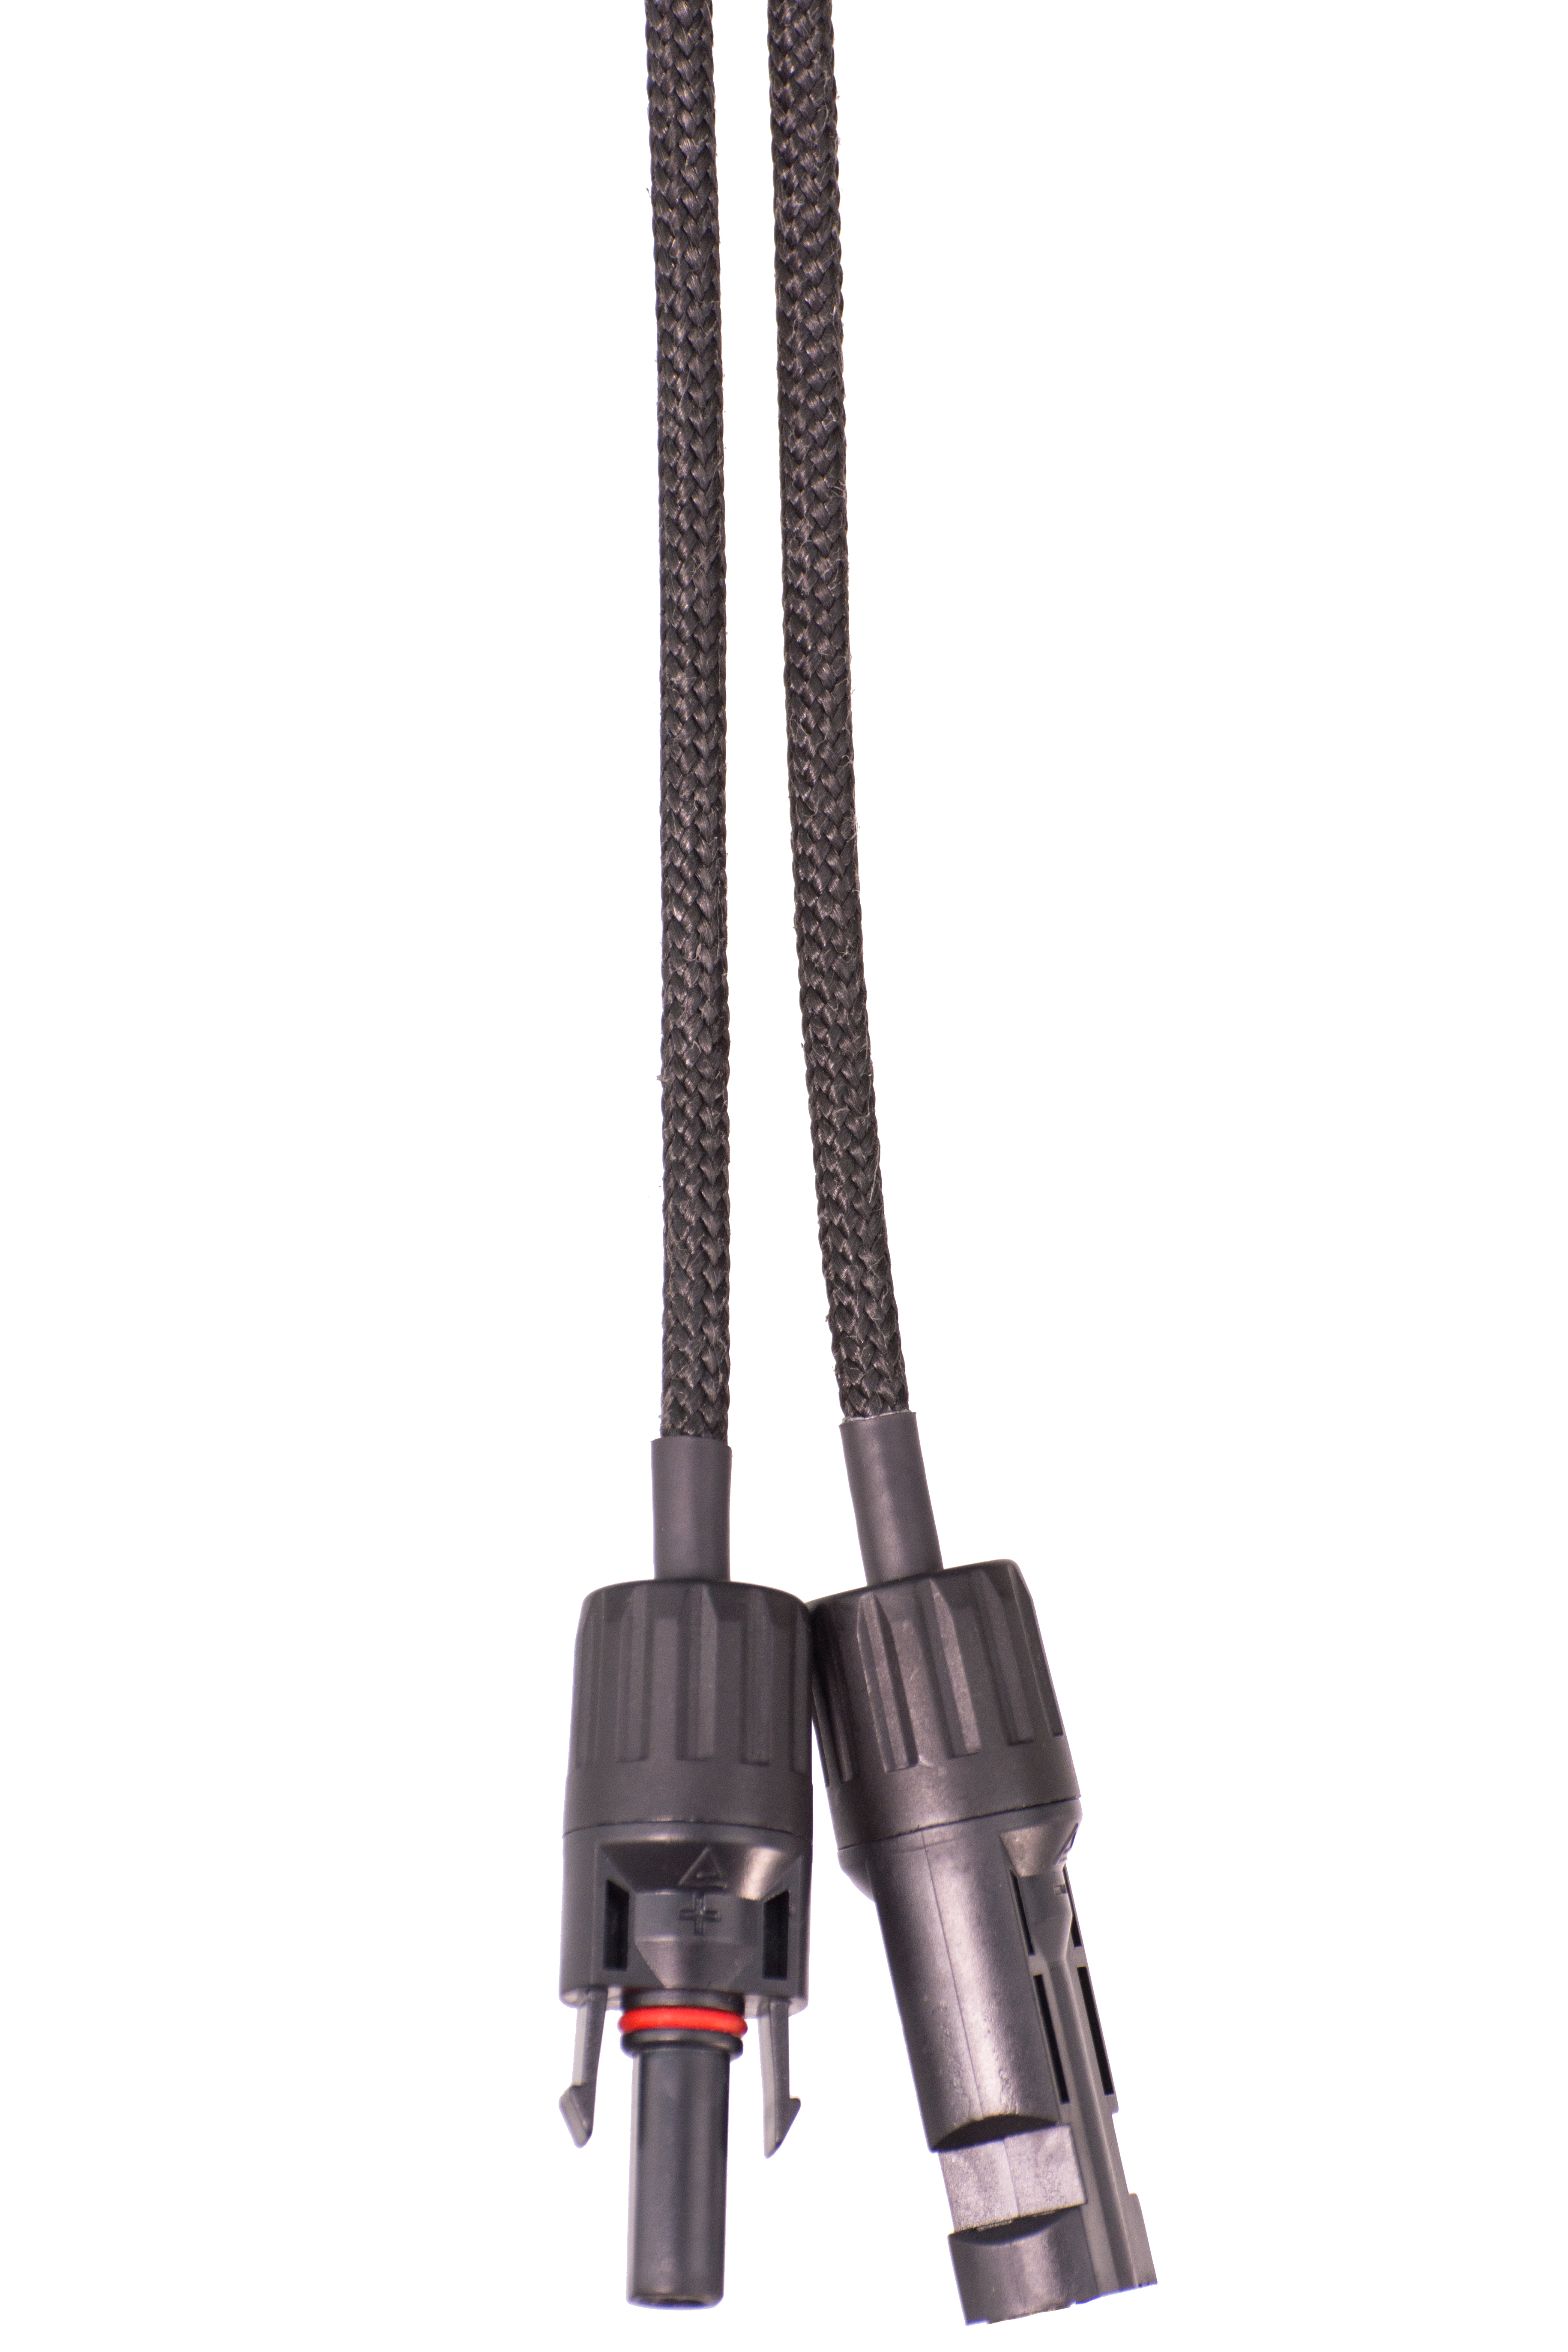 FLIN-SOLAR FLINflex - eylet - 100W - soft cable